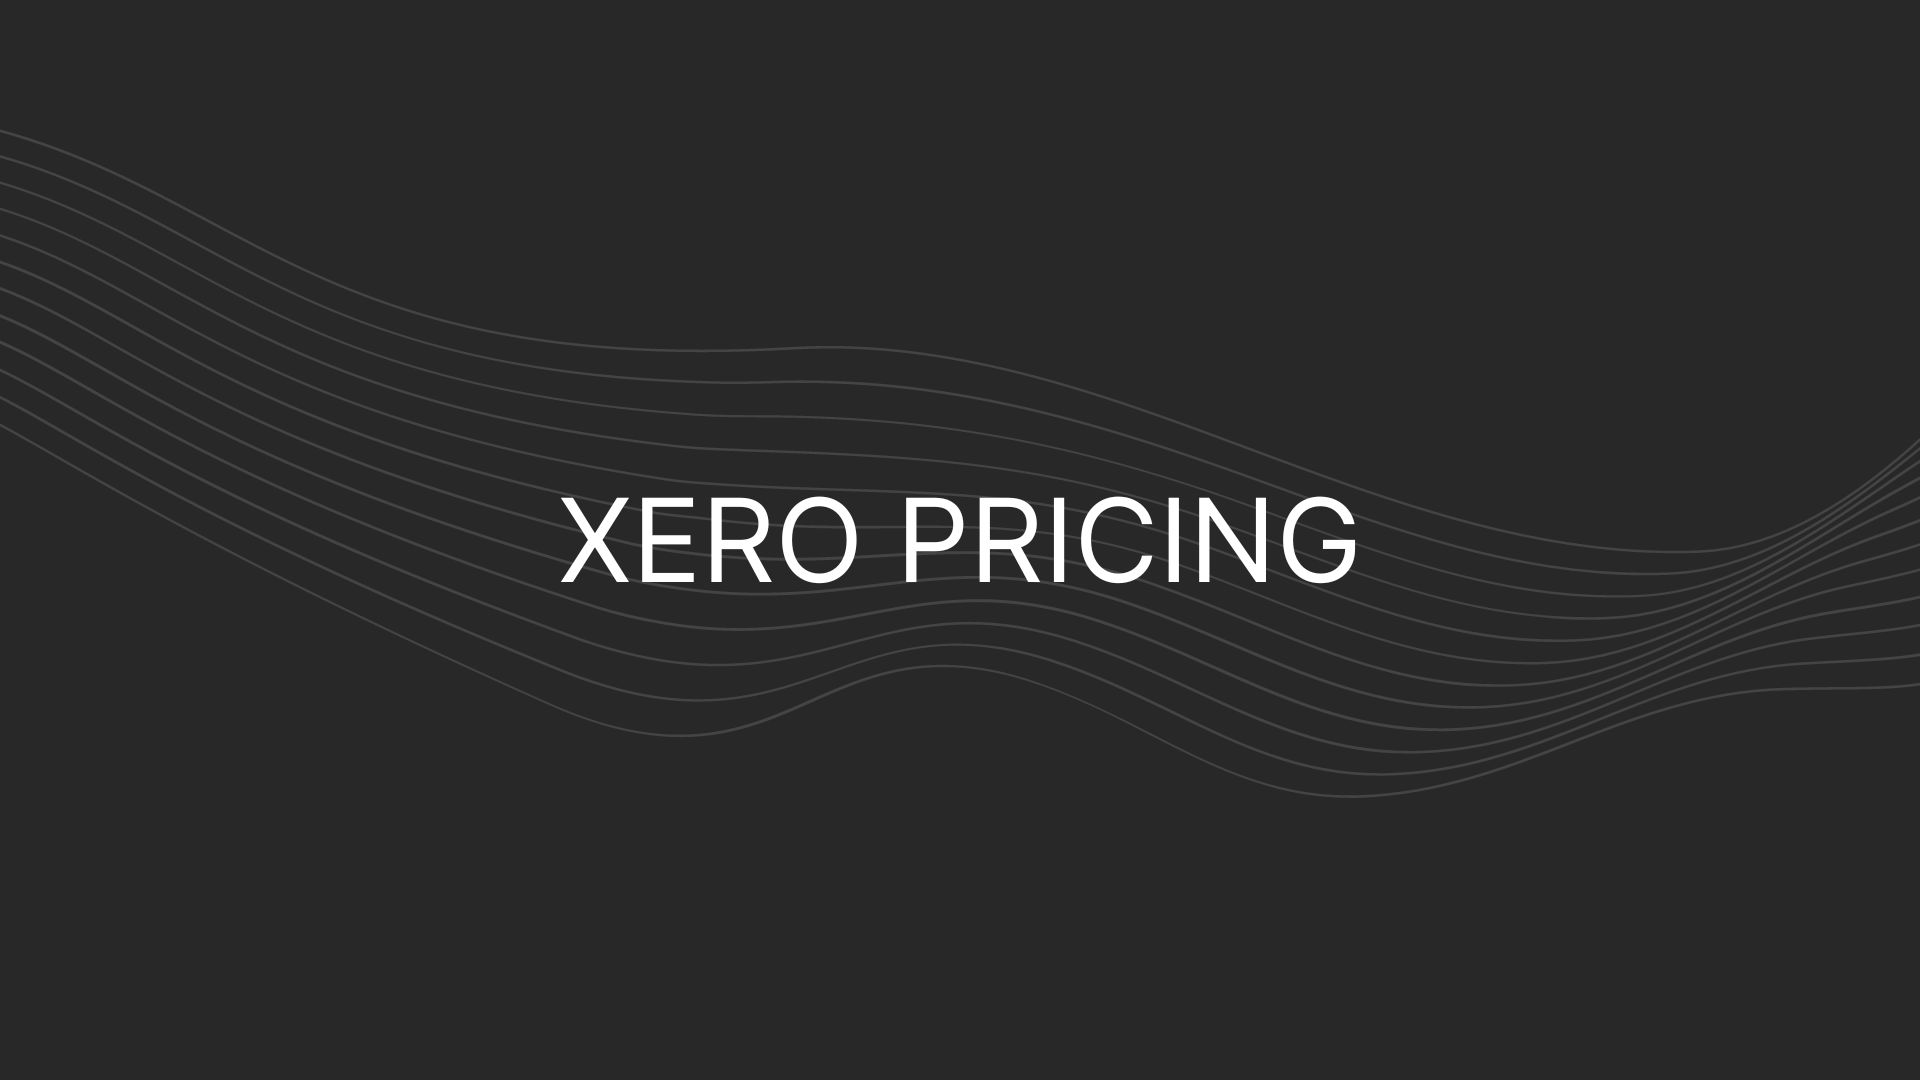 Xero pricing